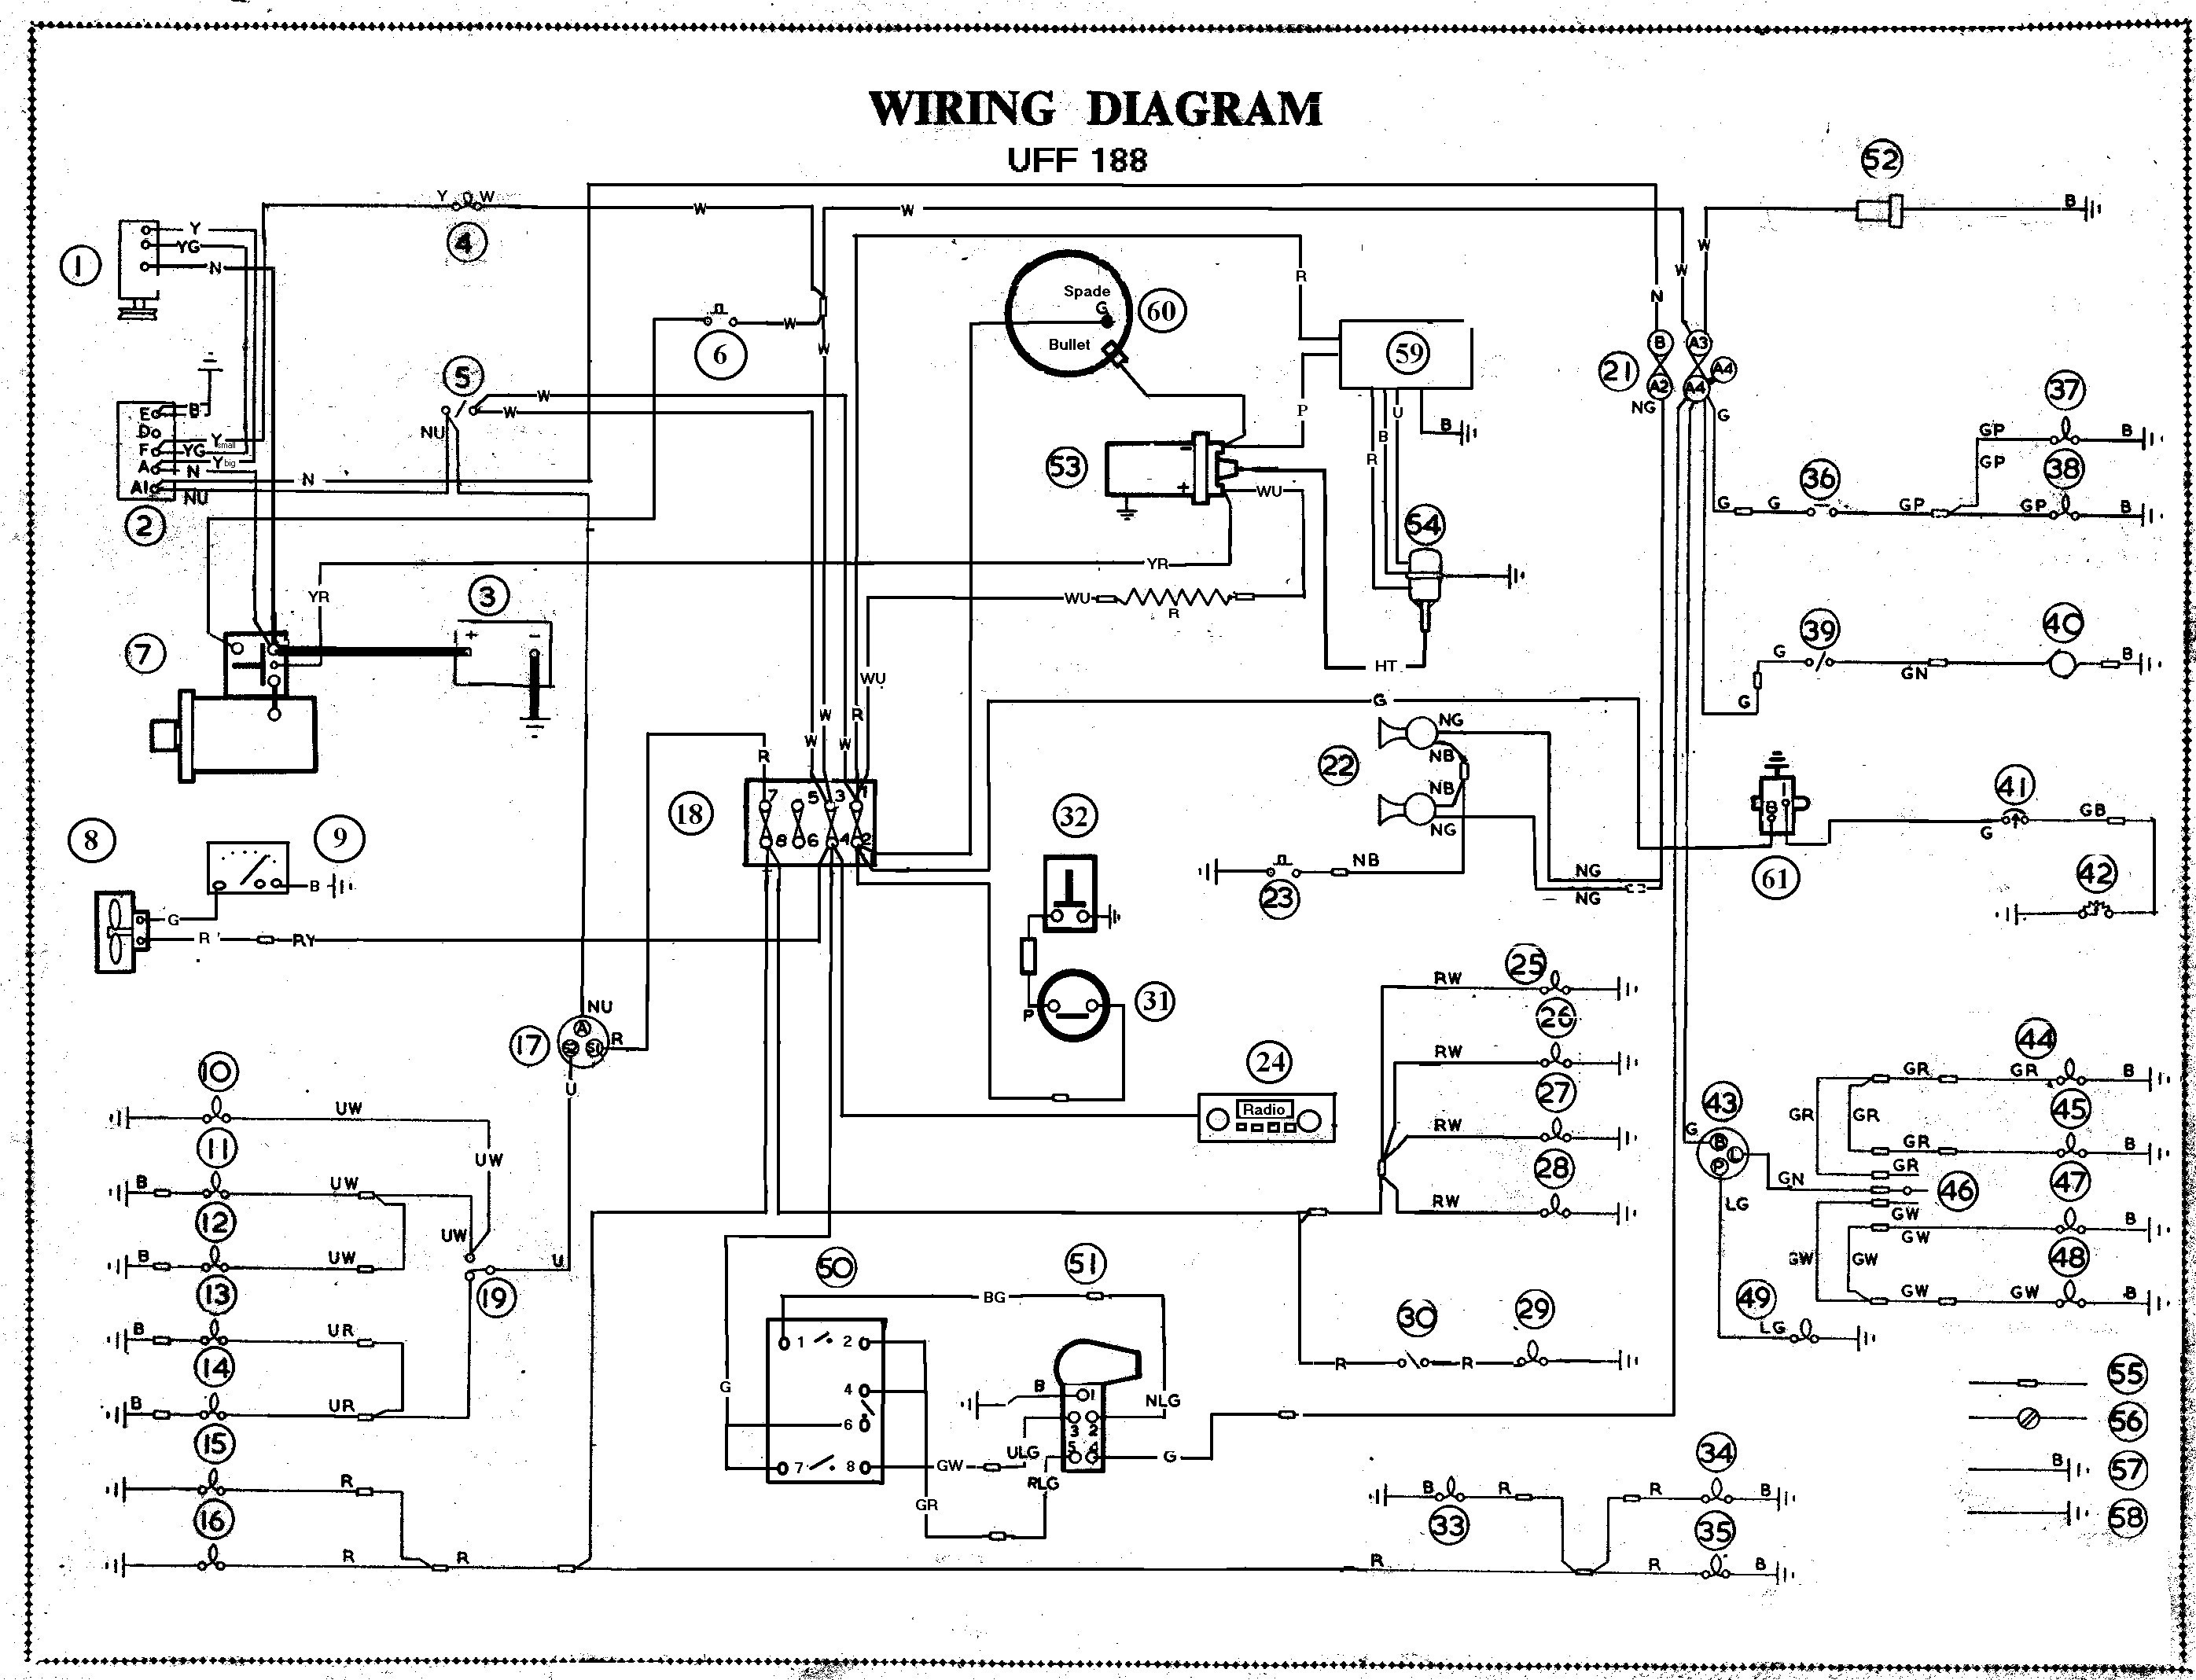 Car Wiring Diagrams | Schematic Diagram - Auto Wiring Diagram